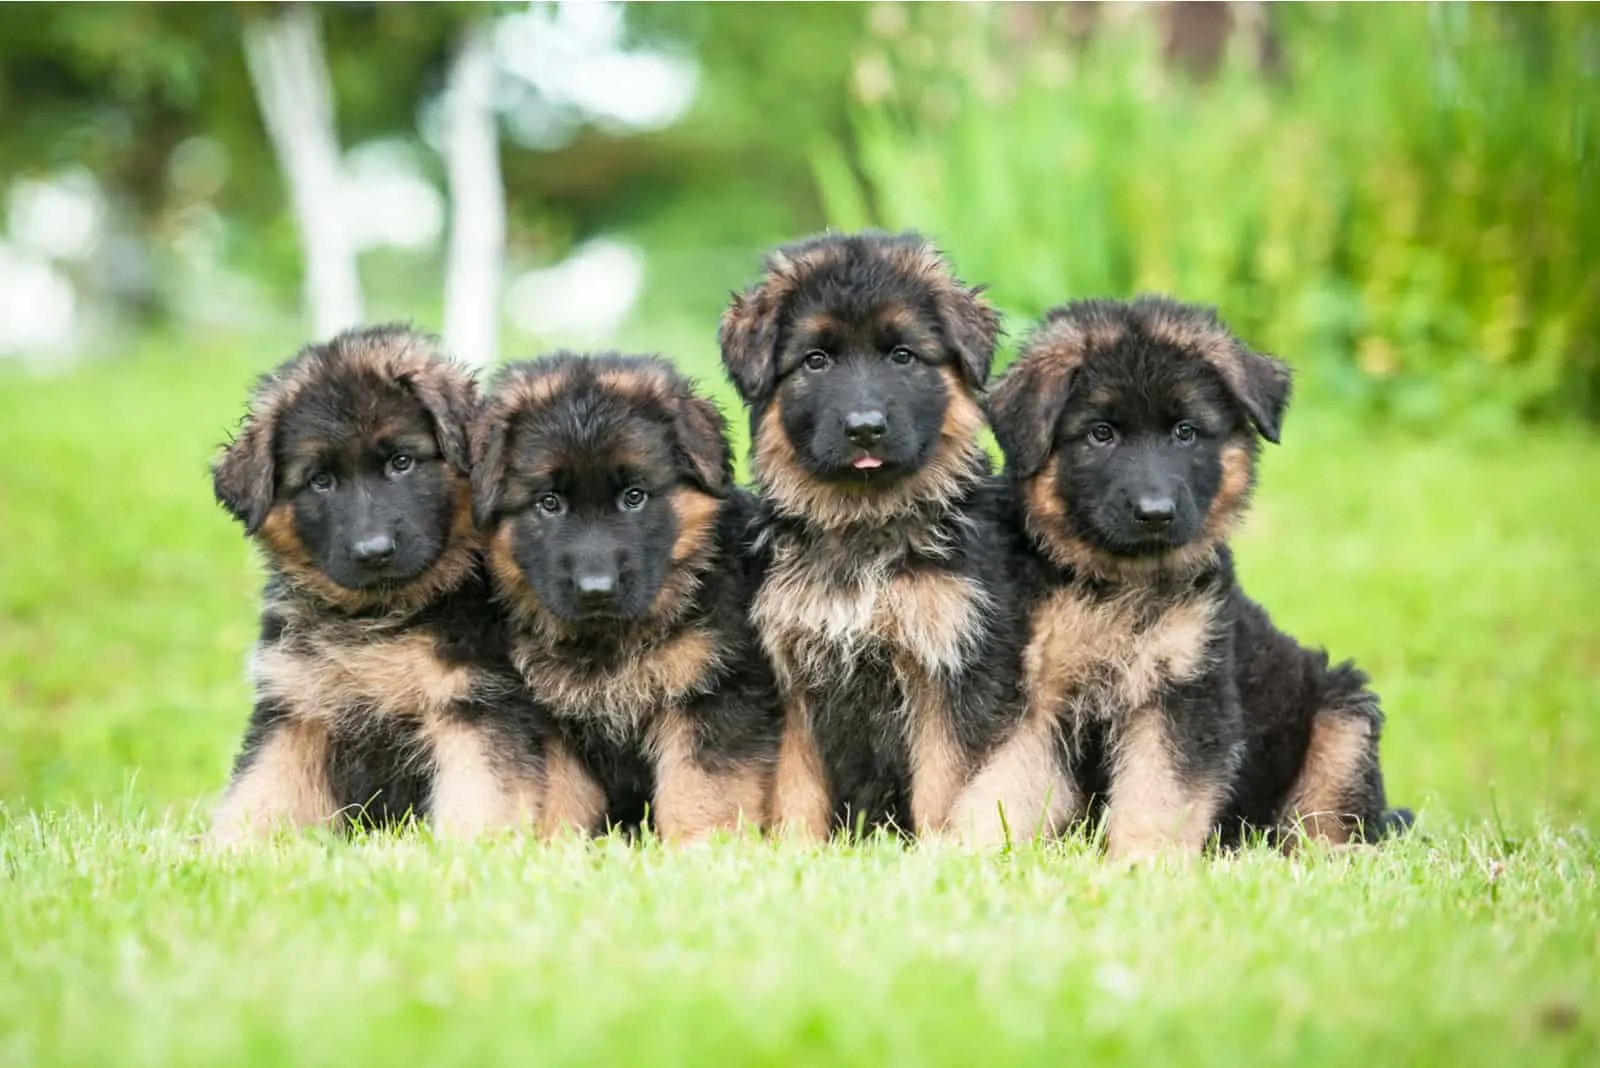 German Shepherd puppies sitting outside on grass